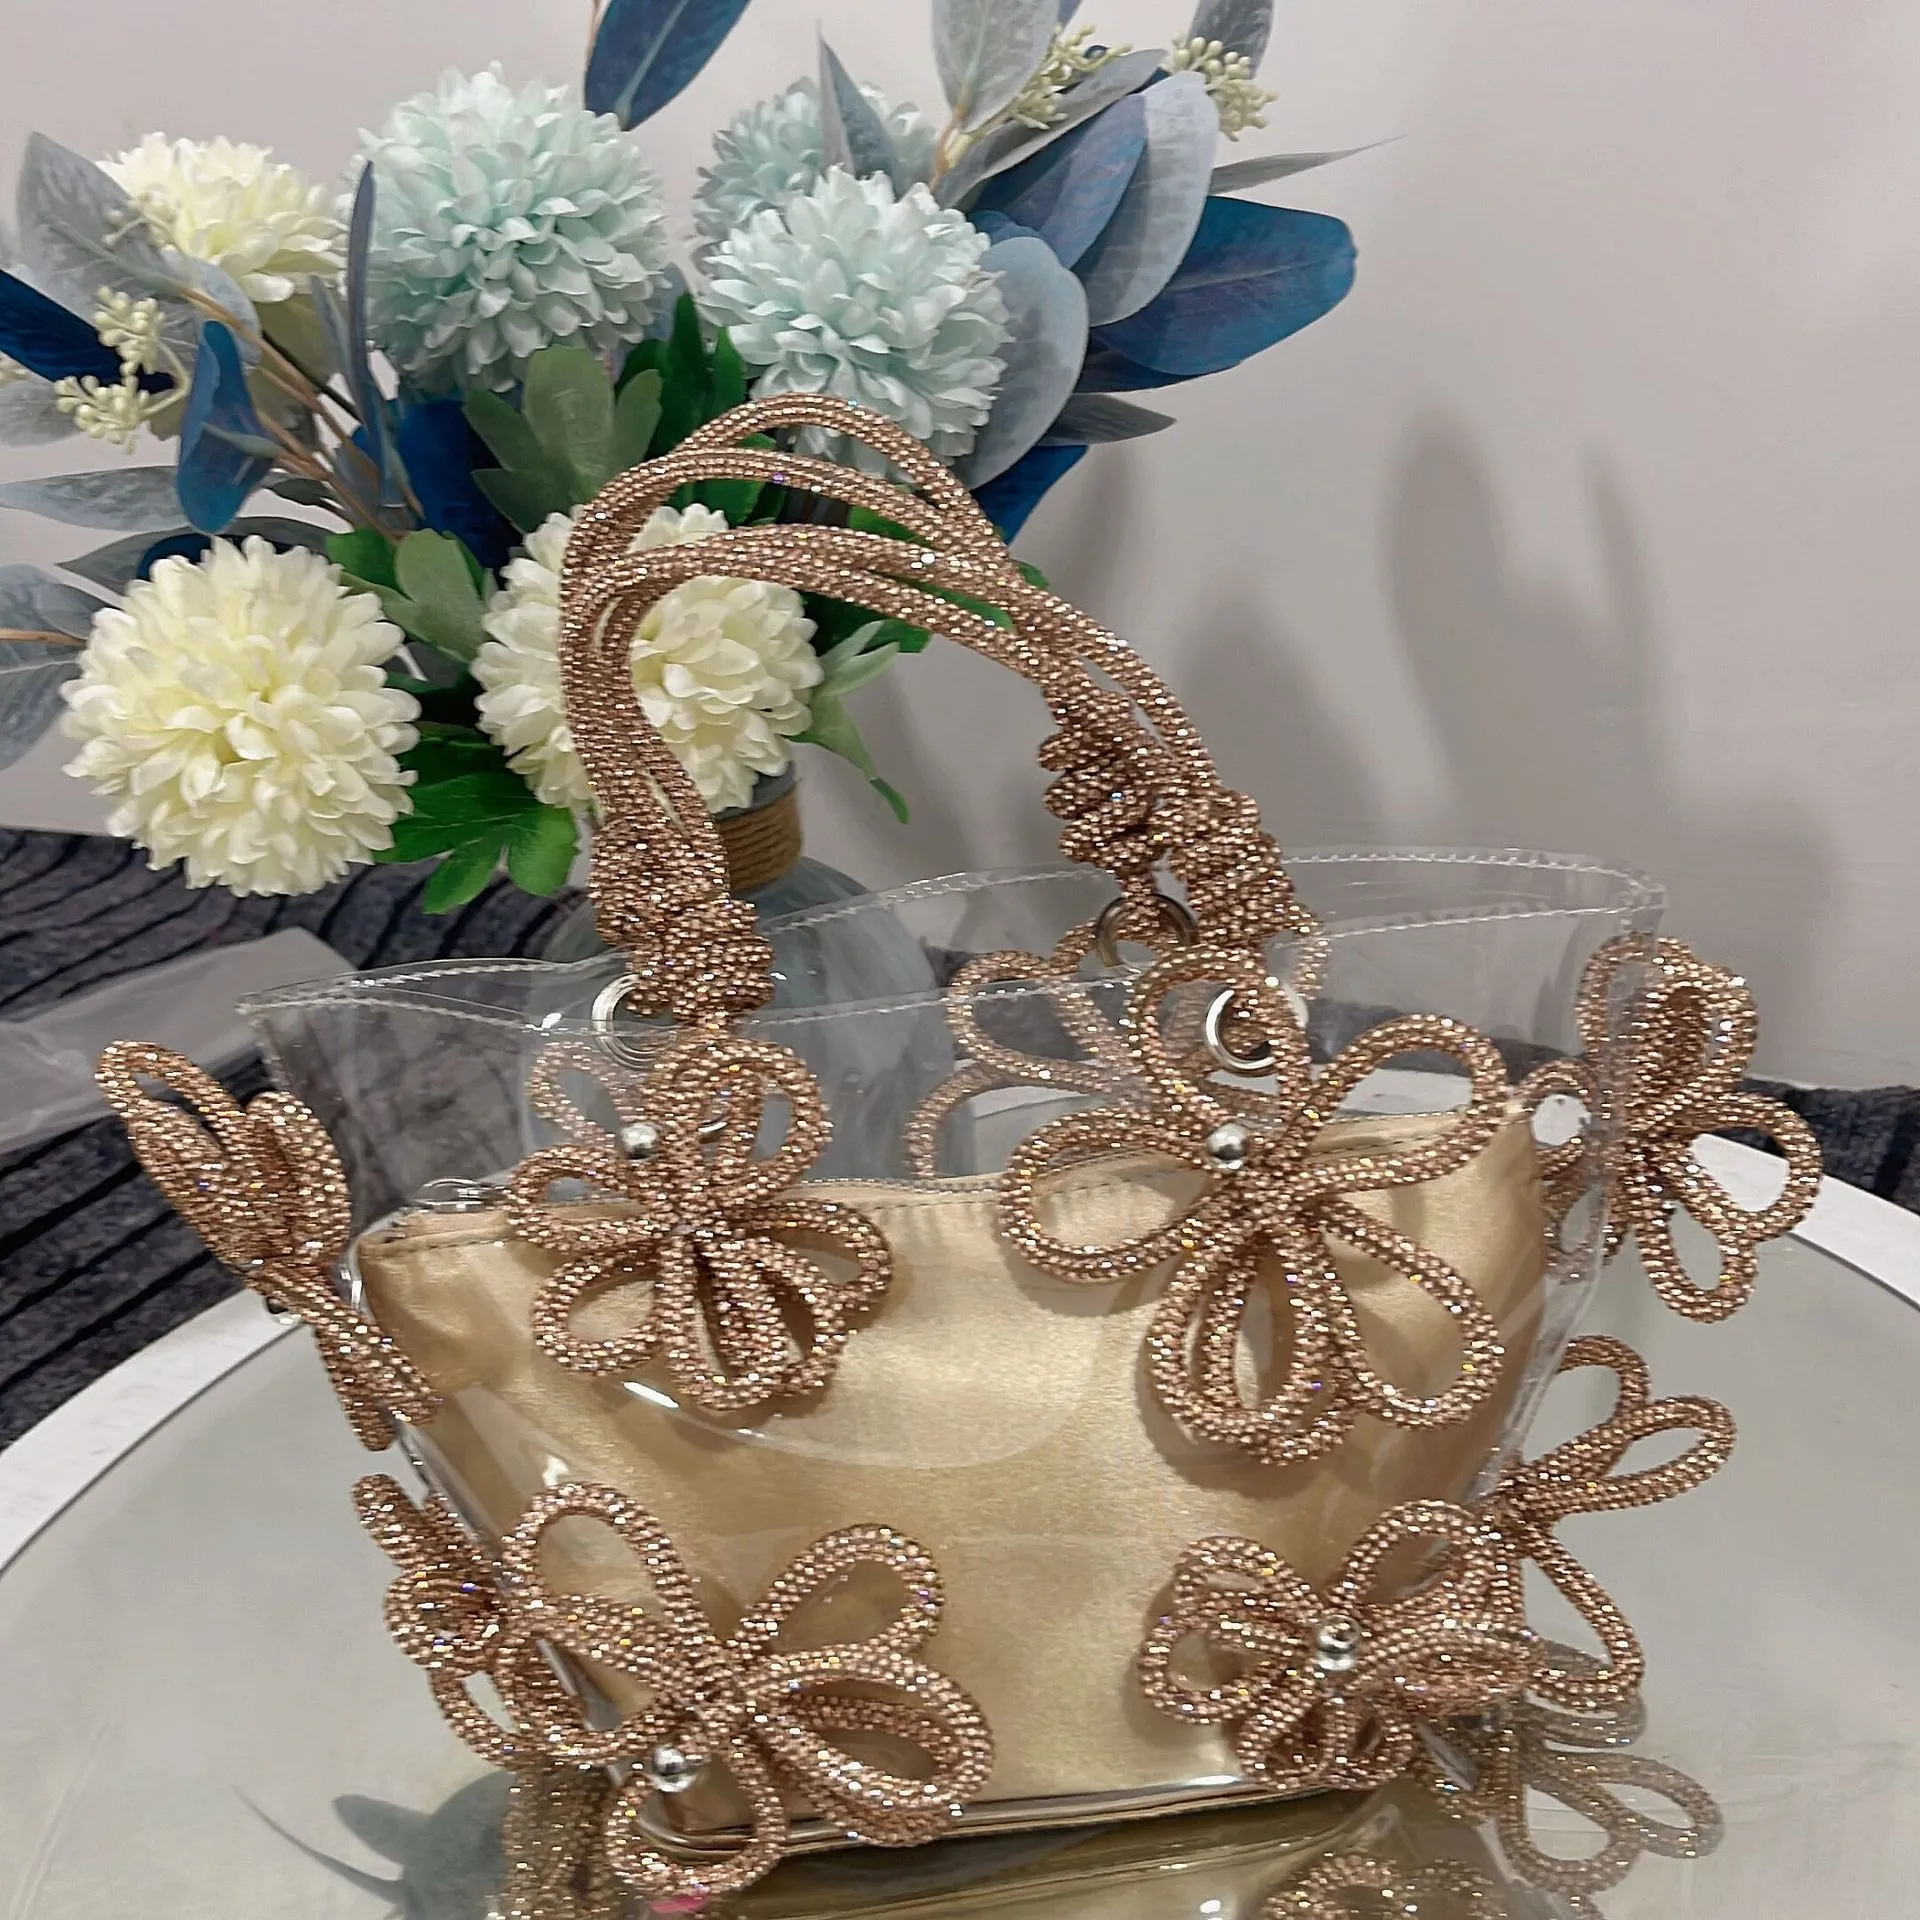 23 New Arrival: "Bring" Diamond-Studded French Fairy Bag - Ultra-Glimmering Flower Bucket Bag & Basket Handbag PINK PEACH SLIVER Champagne